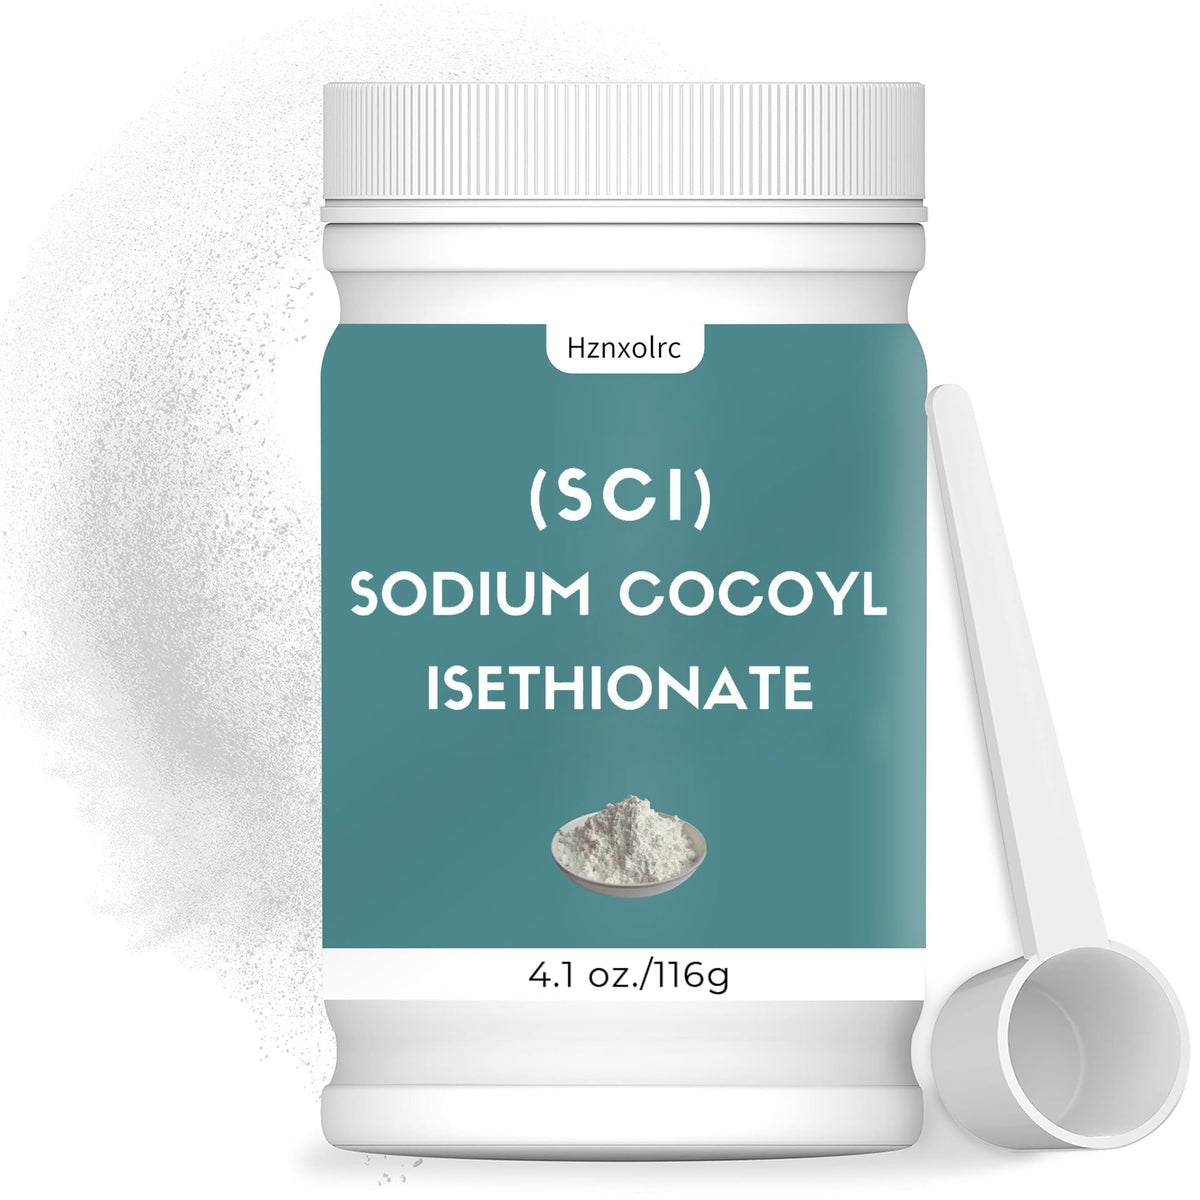 4.1 oz Sodium Cocoyl Isethionate, Premium Sodium Cocoyl Isethionate (SCI) Powder, Amazing Bubbles, Gentle on Skin, Biodegradable, Suitable for Making Bath Bombs, Bath Truffles and More